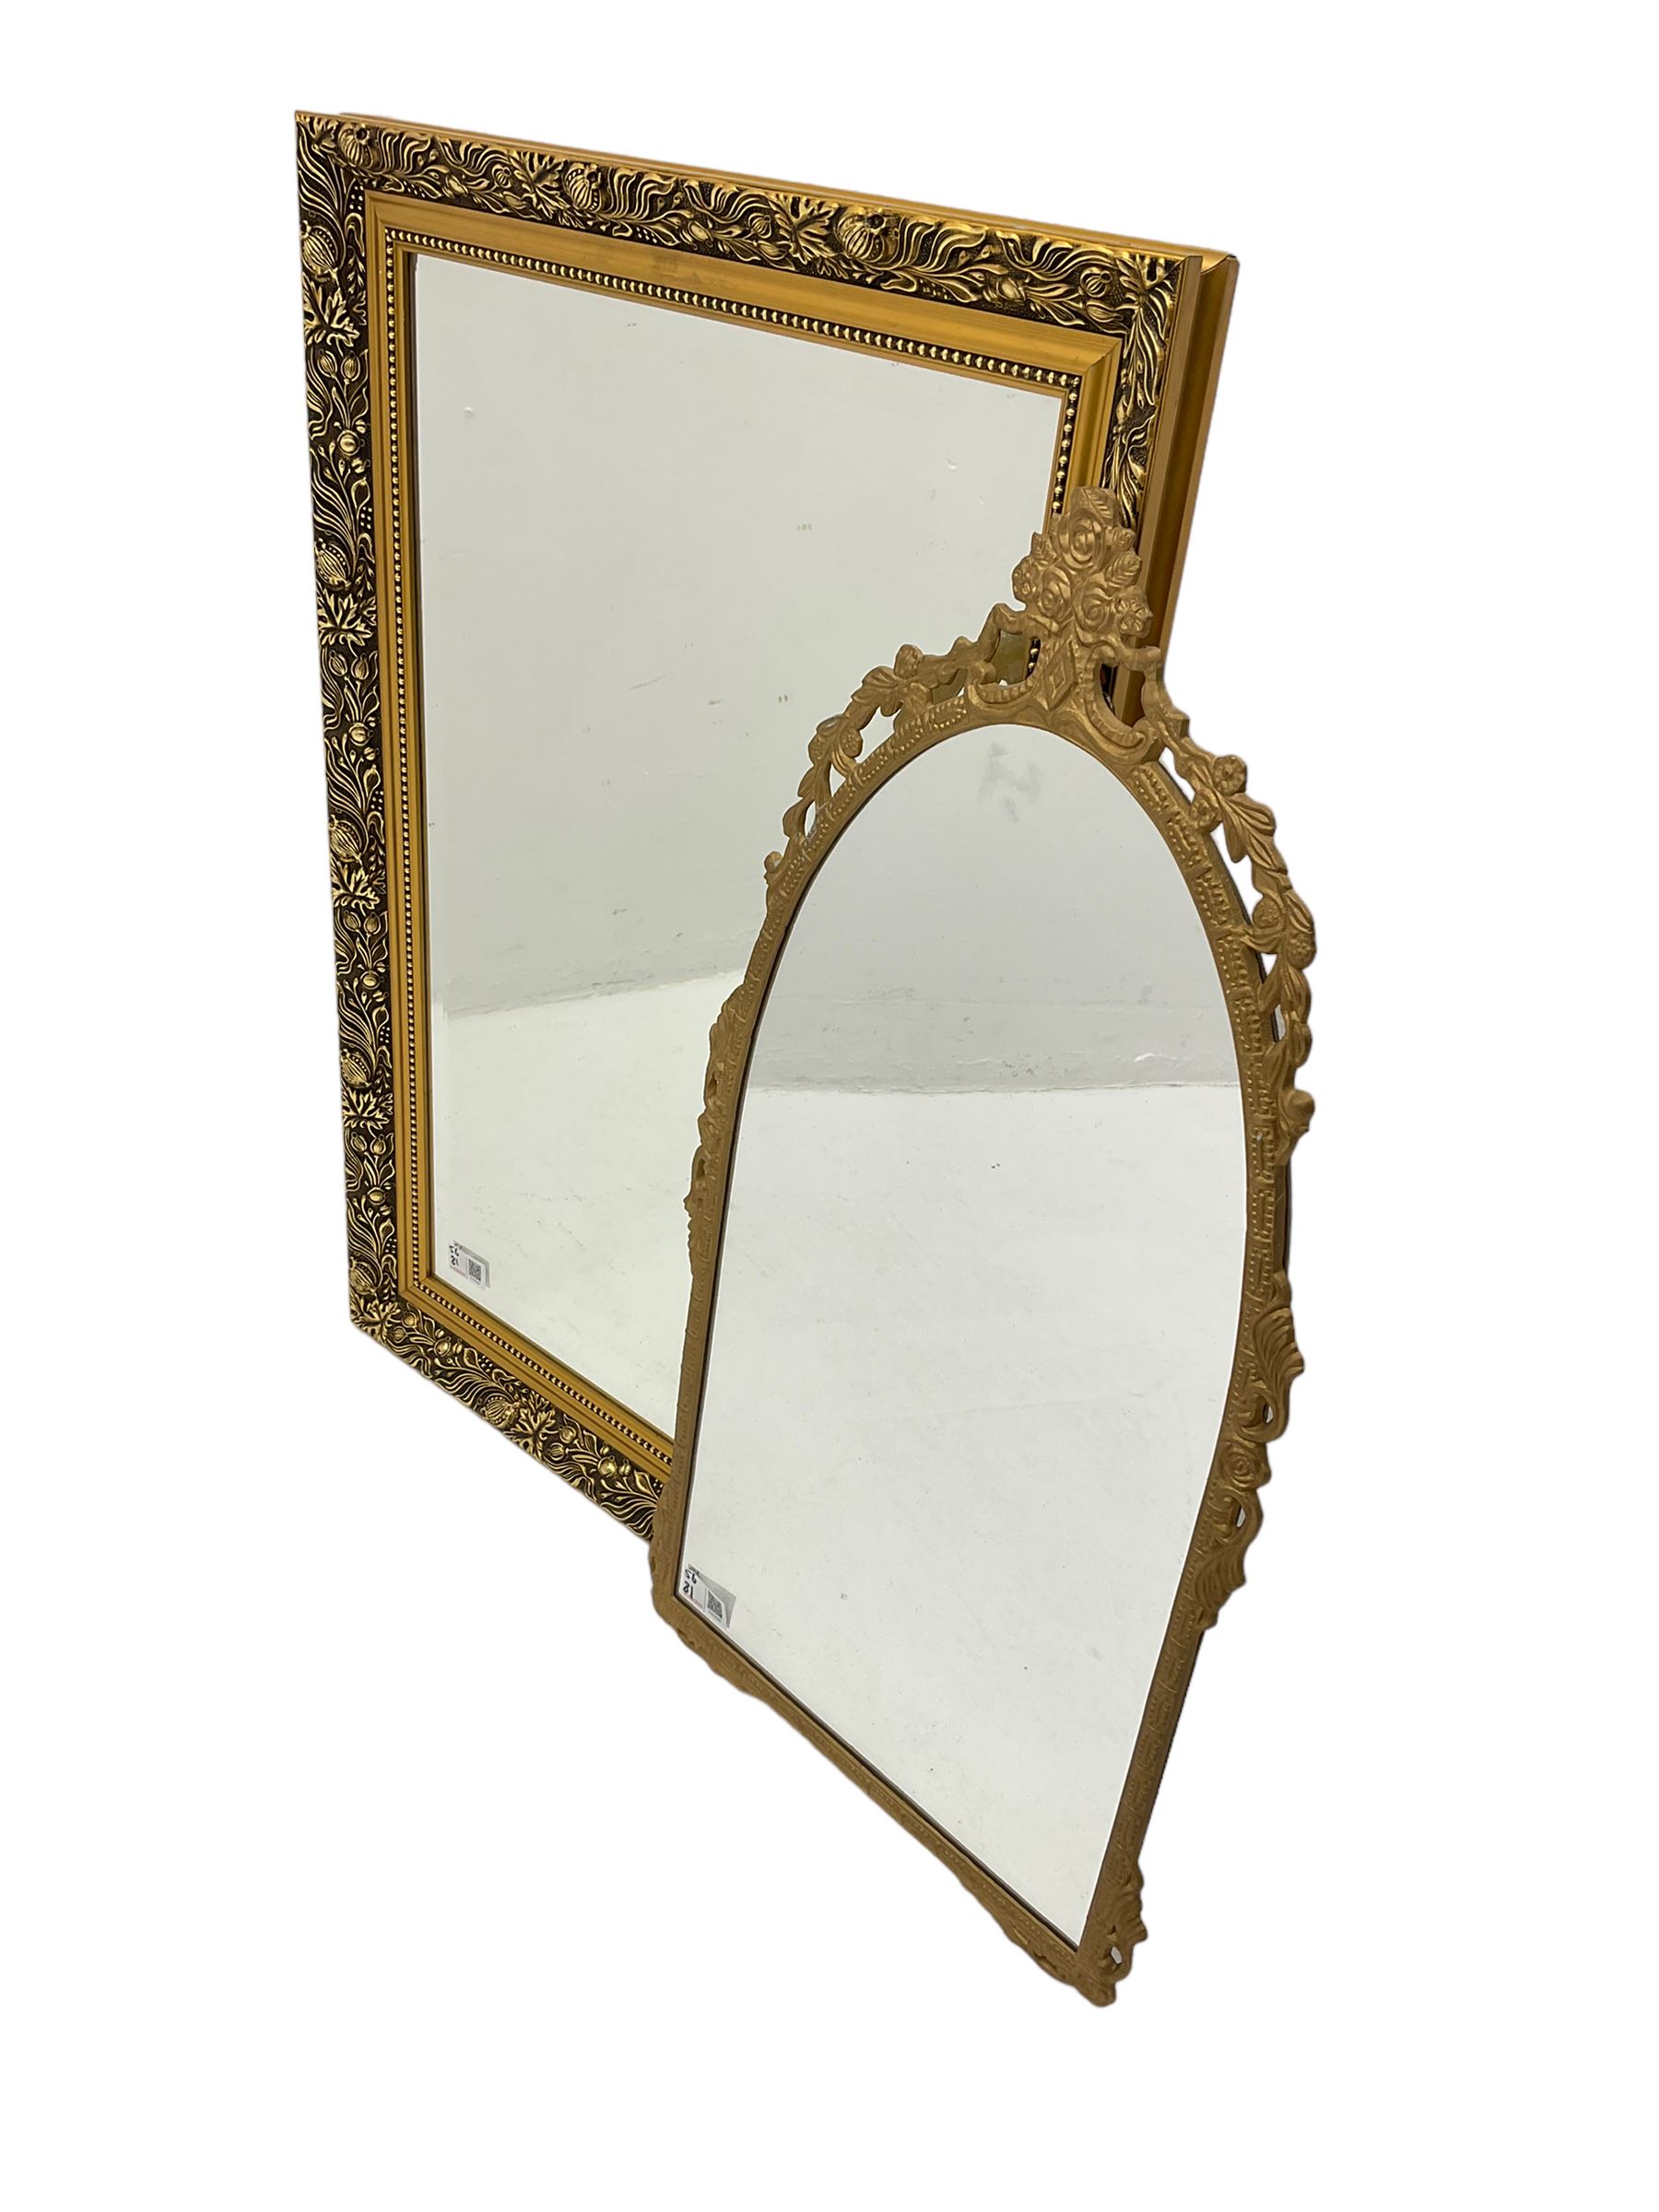 Gilt framed wall mirror - Image 2 of 2